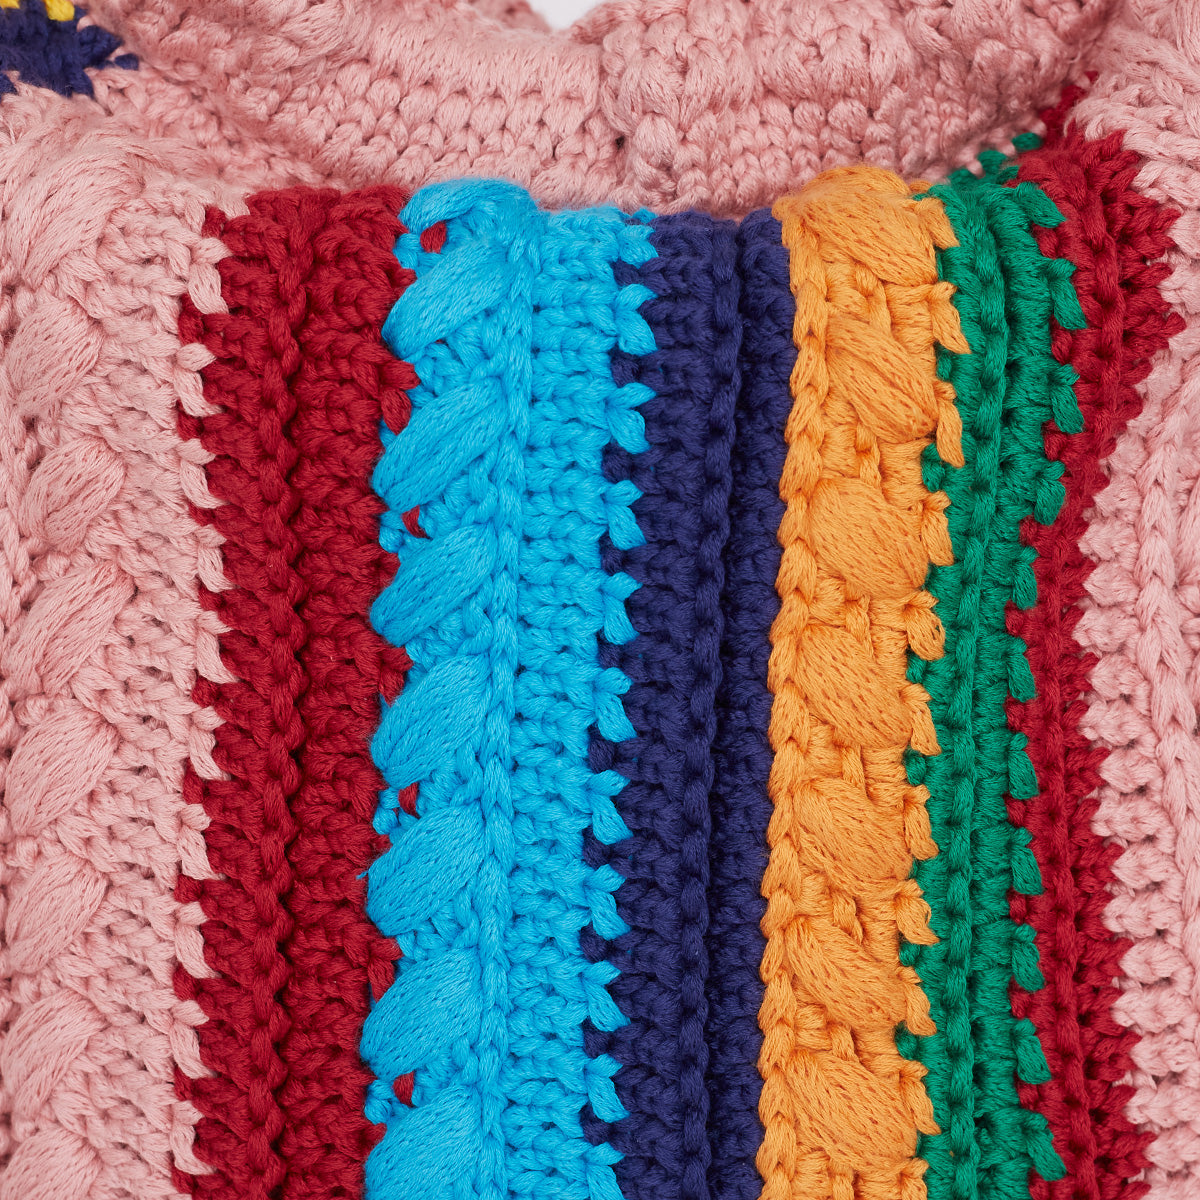 Bolsa Gucci Horsebit Multicolorida Crochet